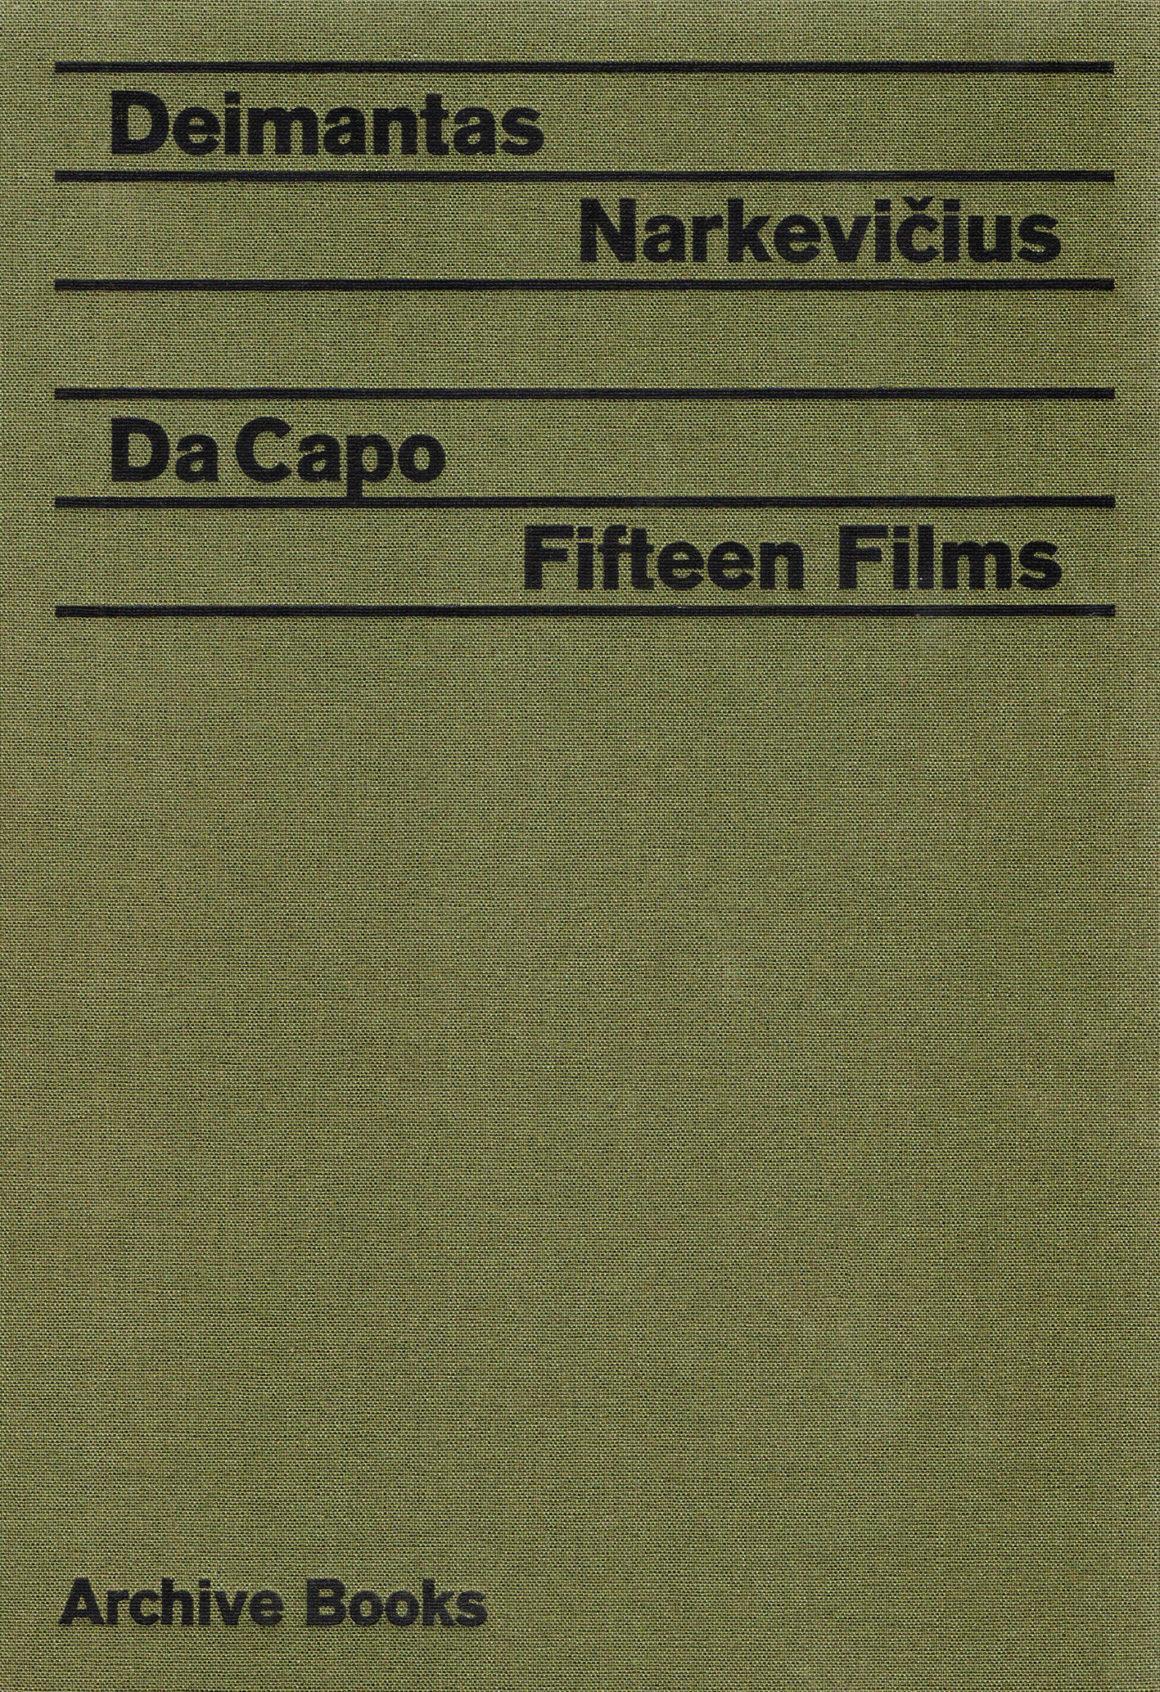 Da Capo. Fifteen Films